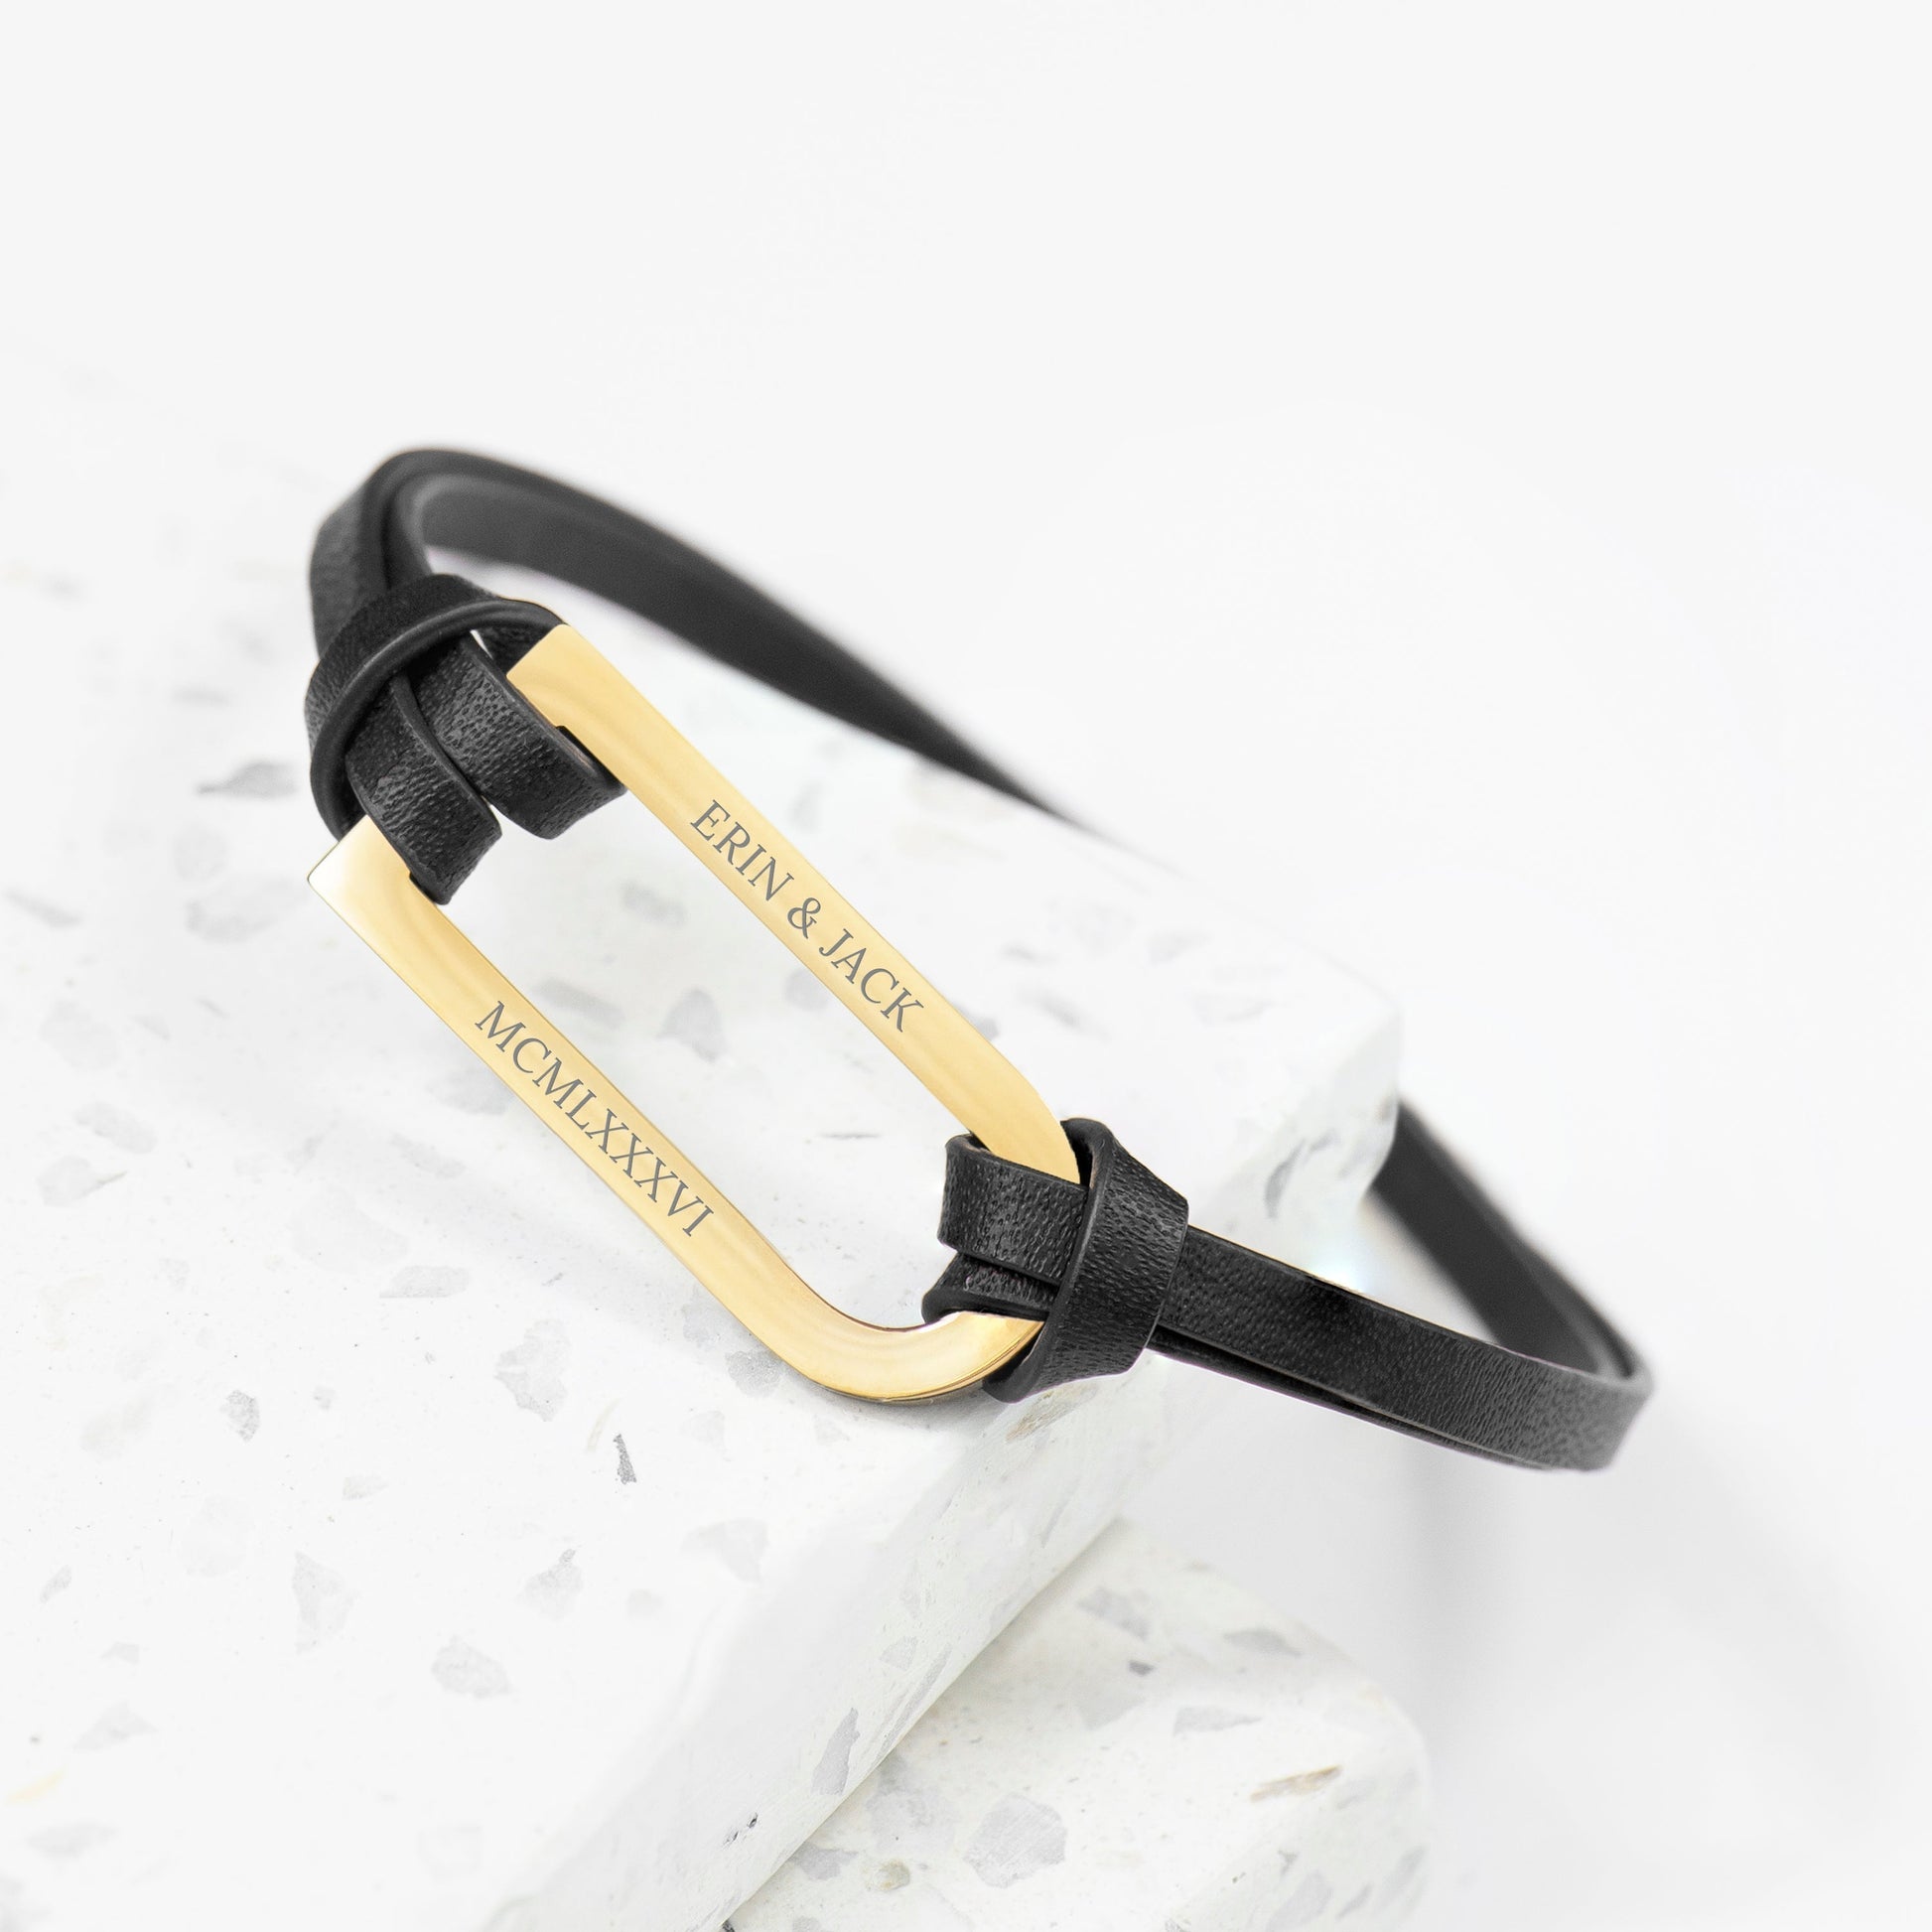 Personalized Men's Bracelets - Personalized Men's Shoreditch Gold Bar Black Leather Bracelet 